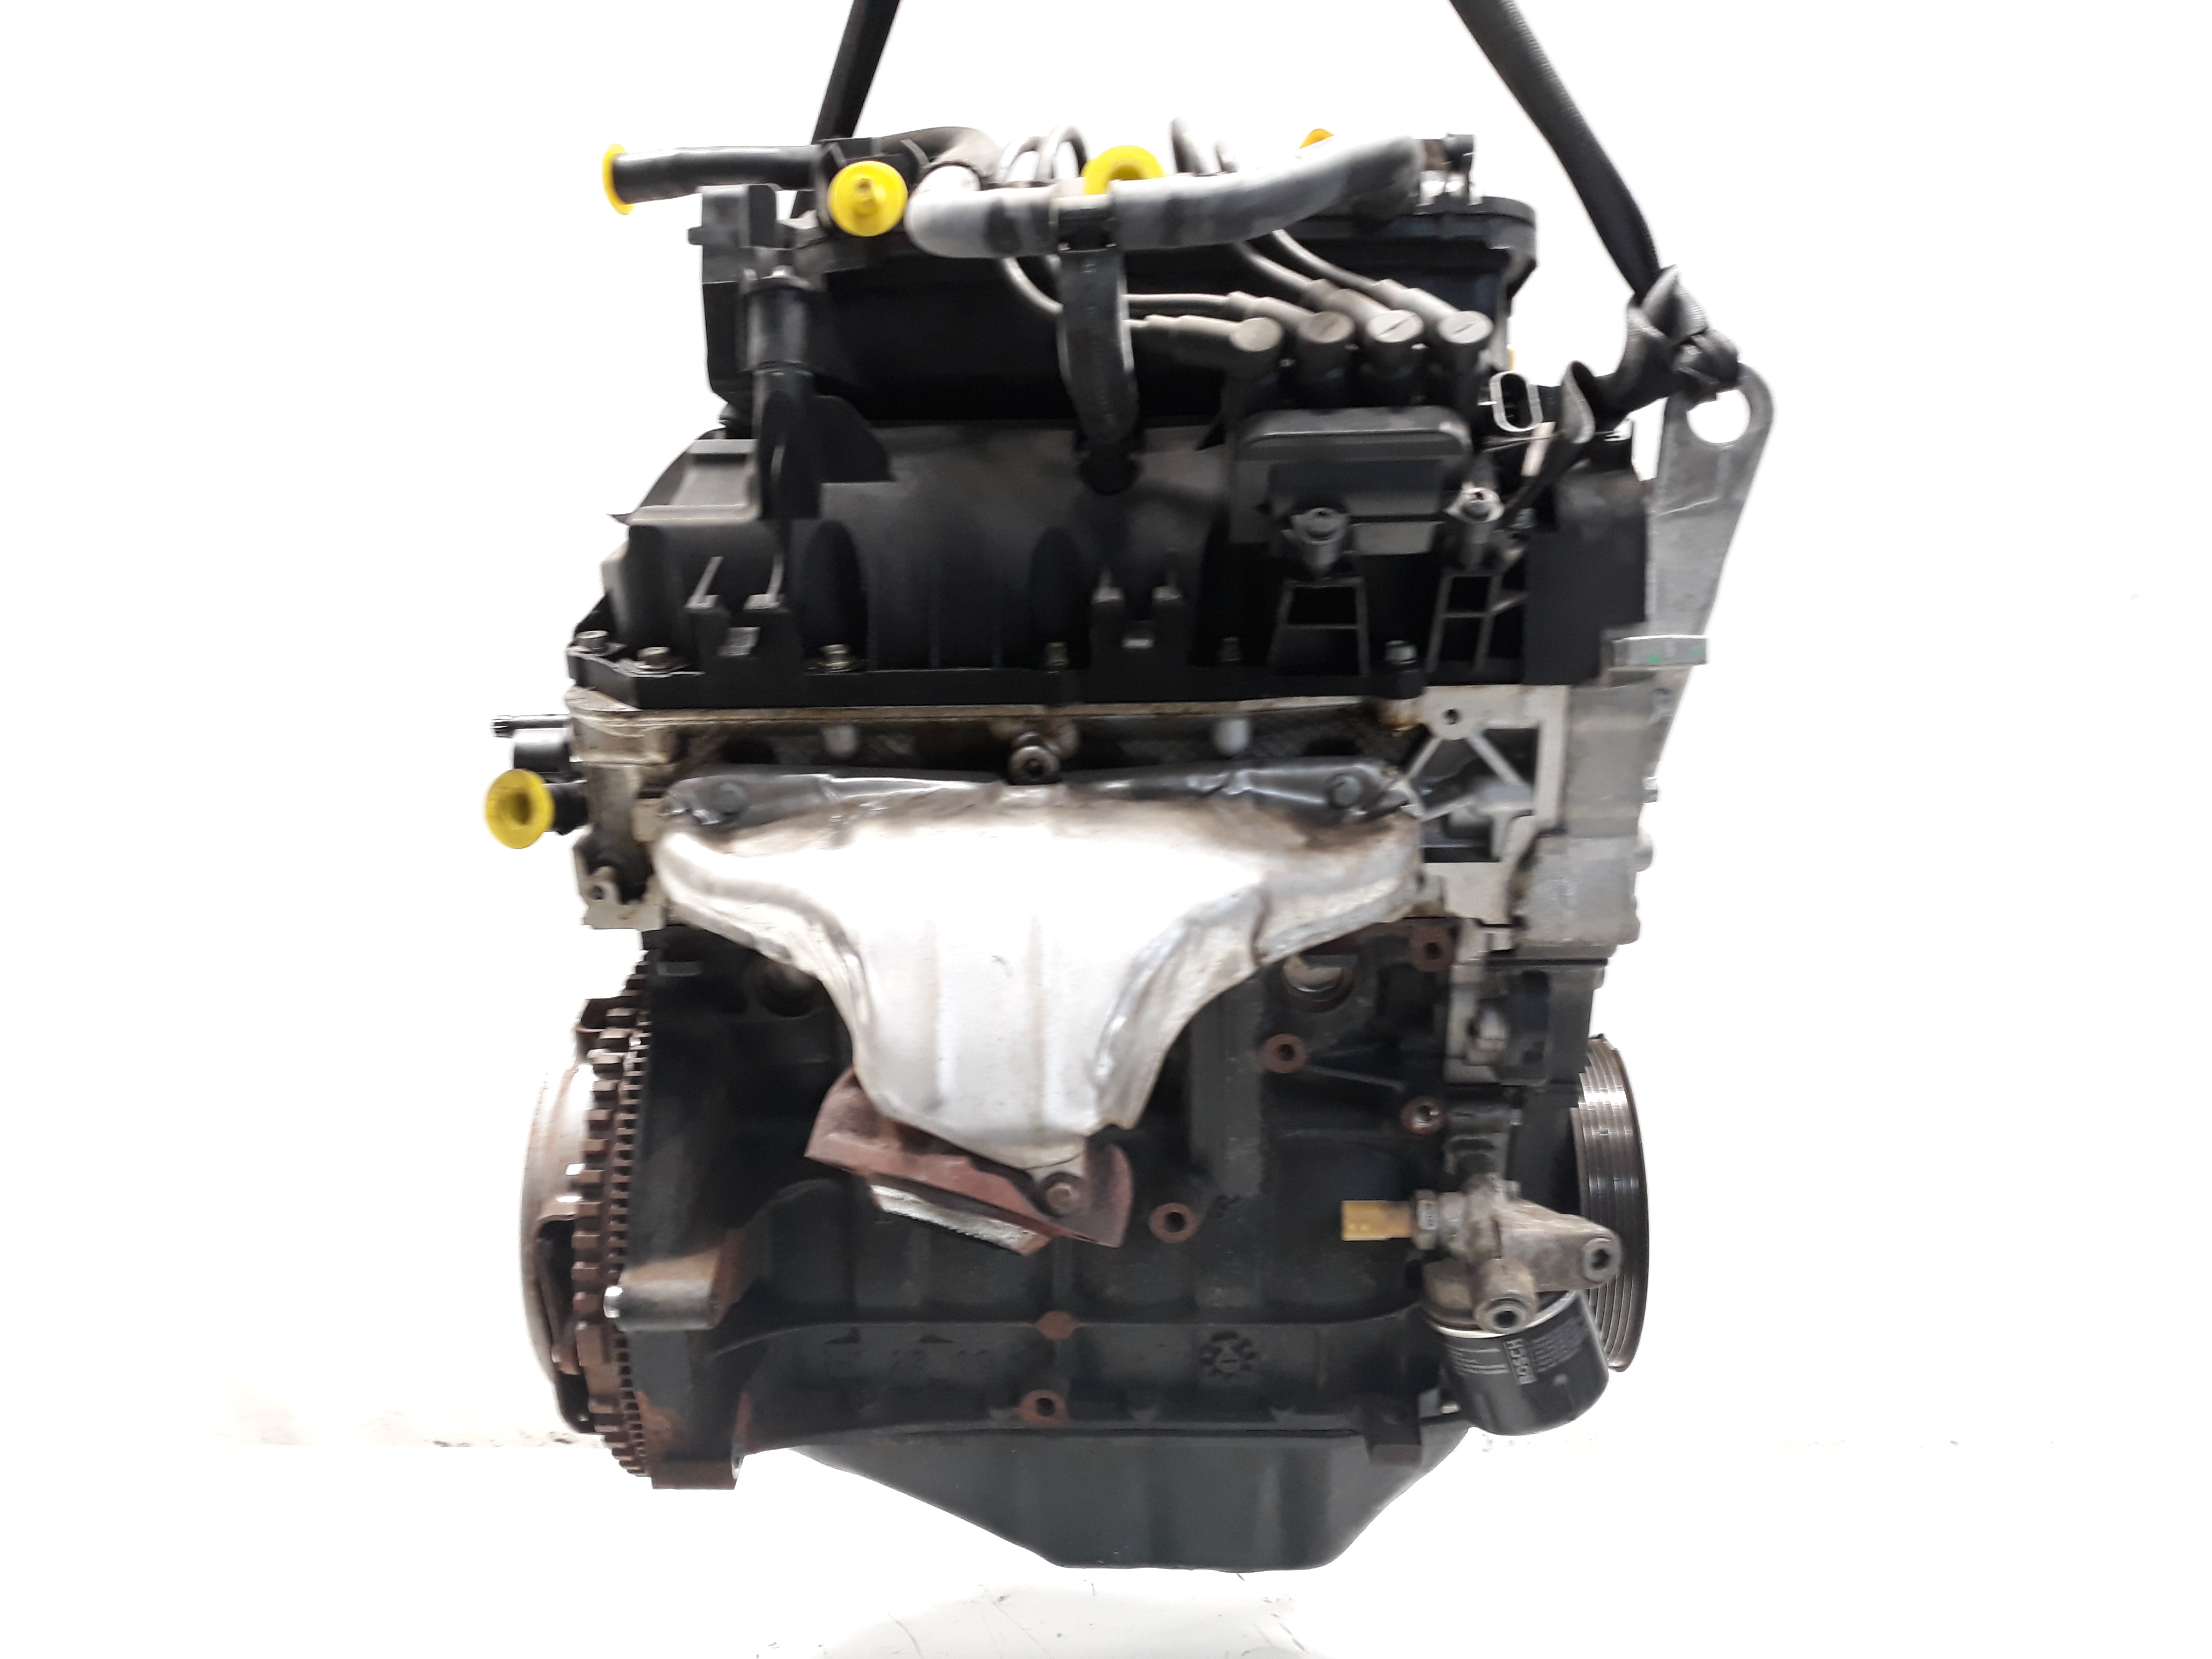 Renault Twingo 2 CN0 Bj.2013 Motor D4FJ772 1.2 55kw 88267km